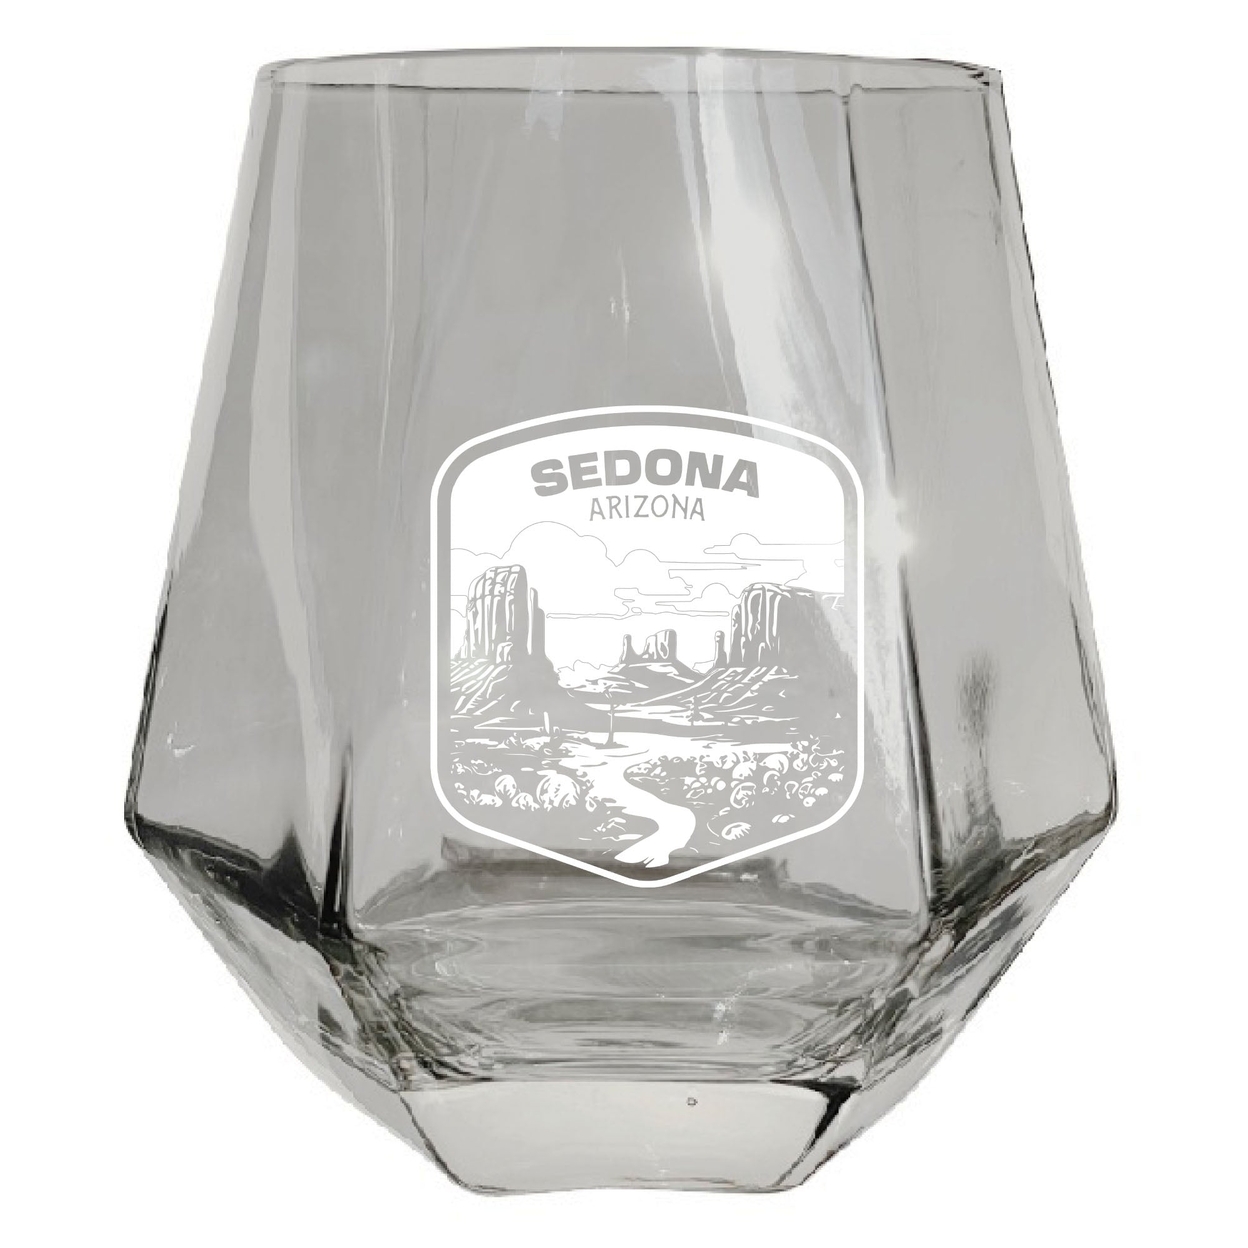 Sedona Arizona Souvenir Wine Glass EngravedDiamond 15 Oz Clear Iridescent - Gray,,Single Unit